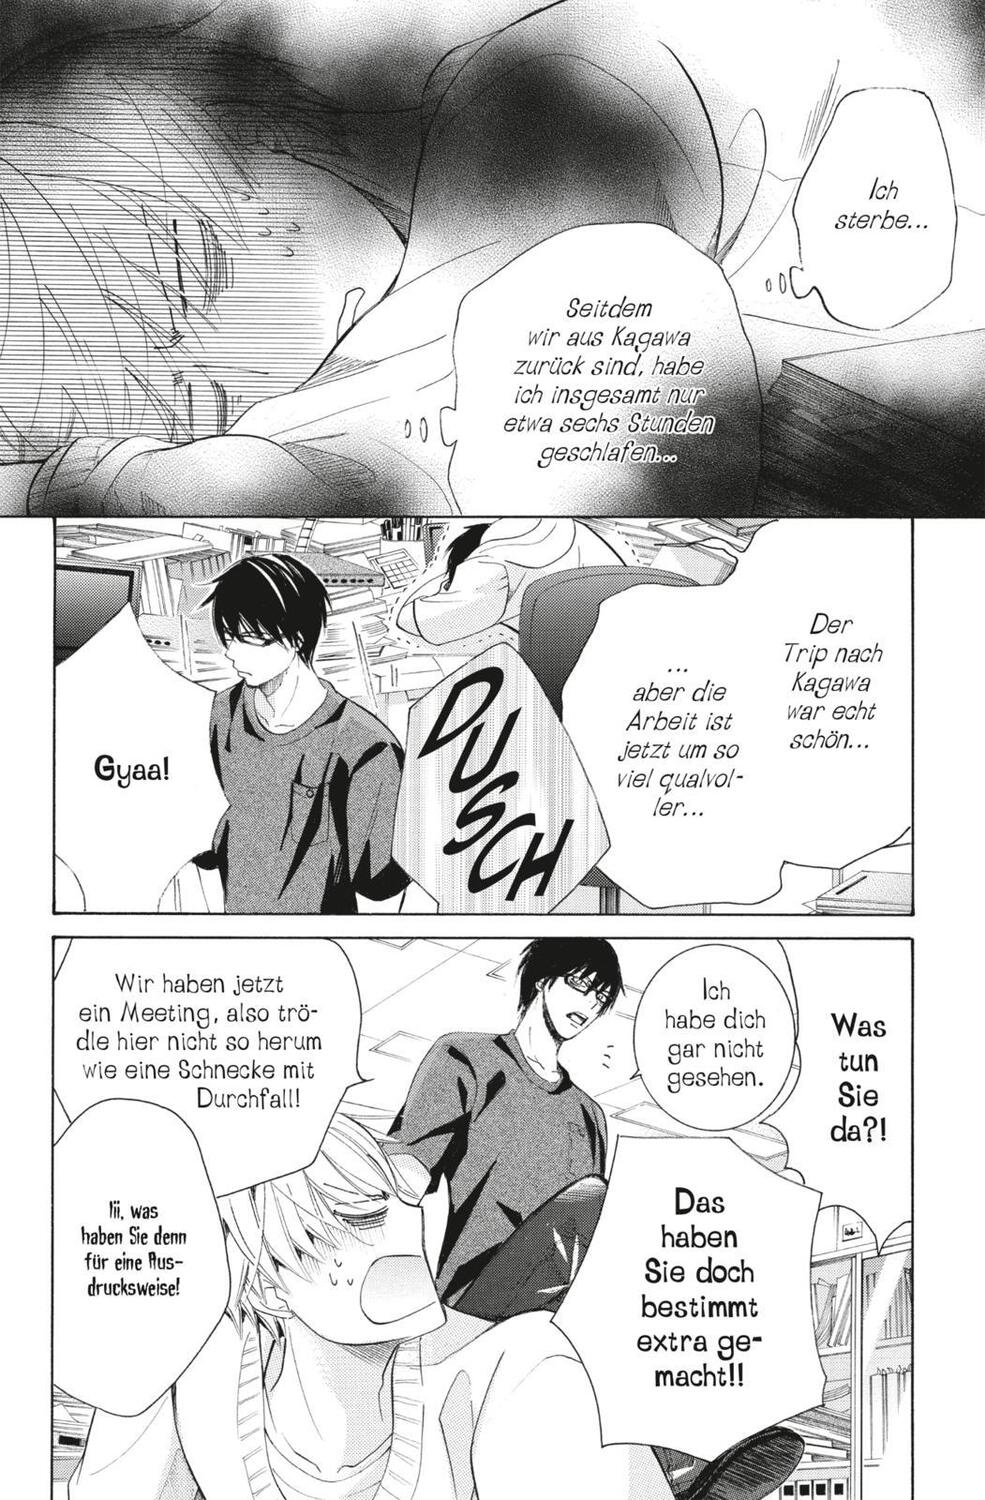 Bild: 9783551792822 | Sekaiichi Hatsukoi 12 | Boyslove-Story in der Manga-Redaktion | Buch